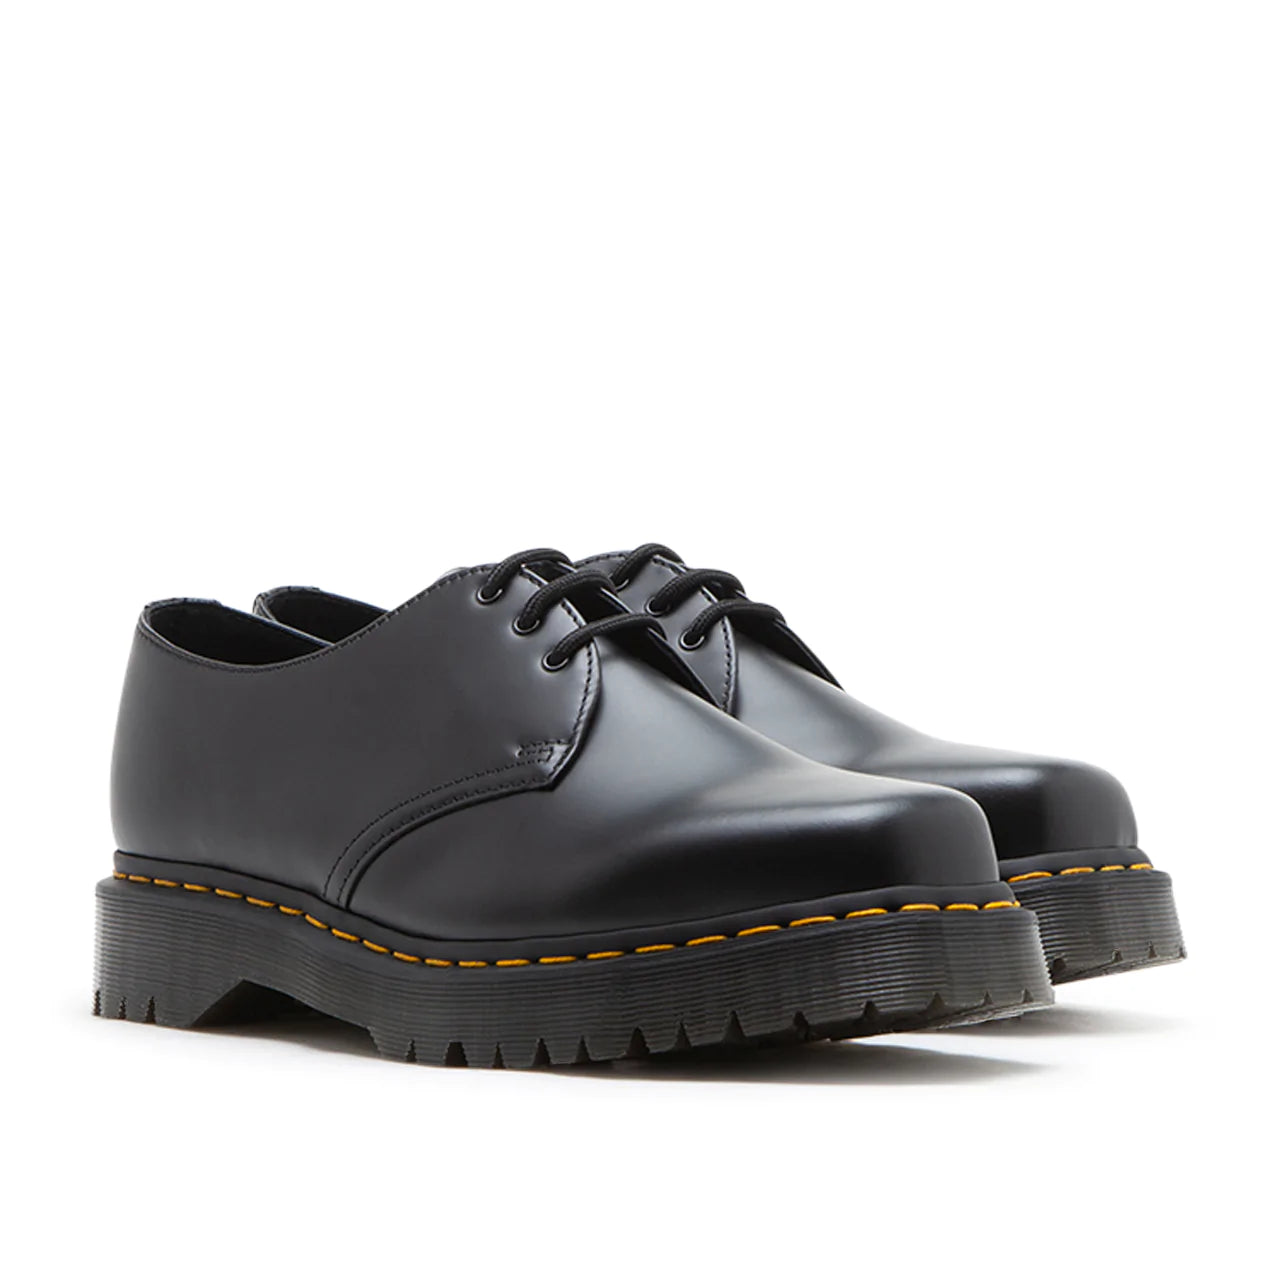 Dr. Martens 1461 Bex Squared Toe Leather Shoes (Black)